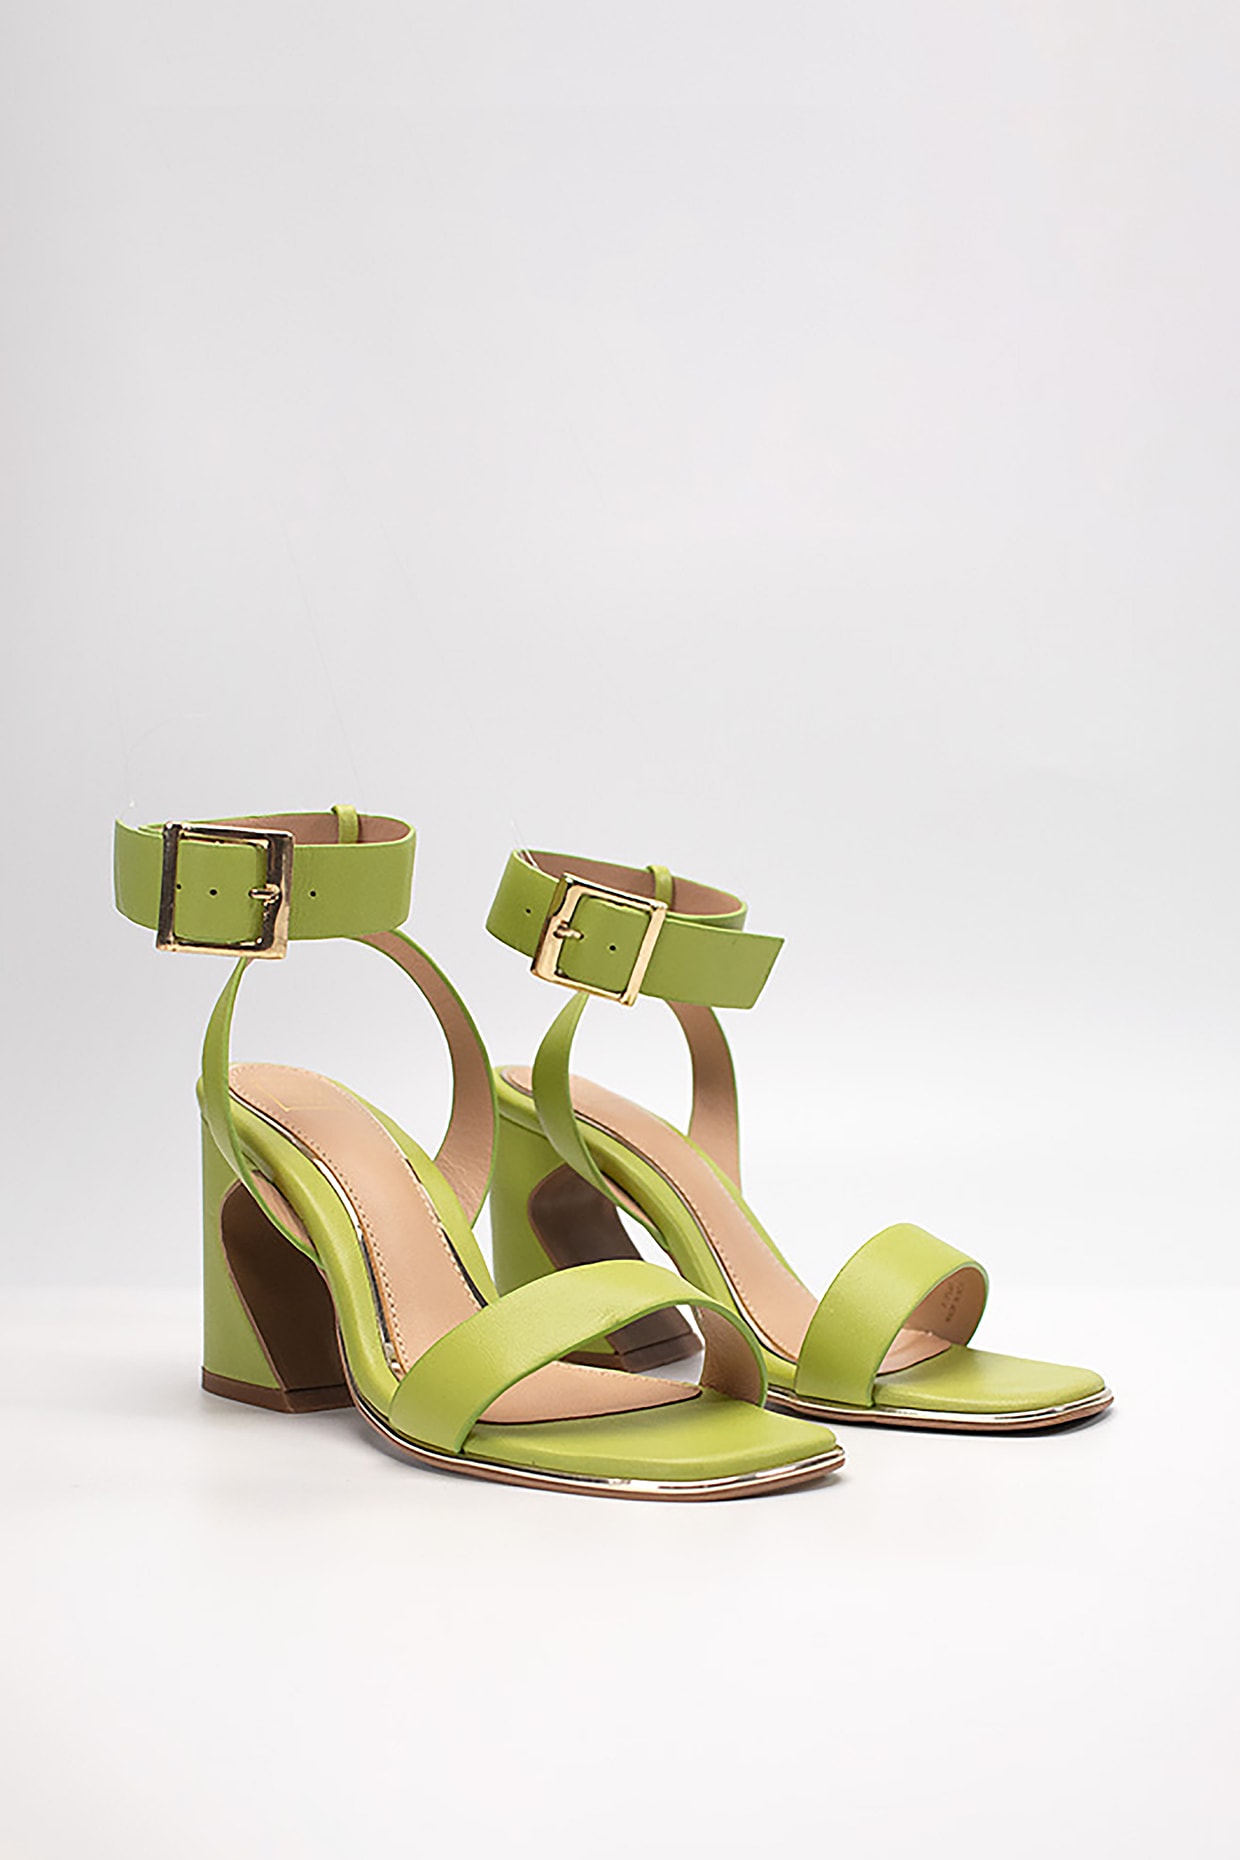 New Look khaki block heels with thin strap, worn... - Depop